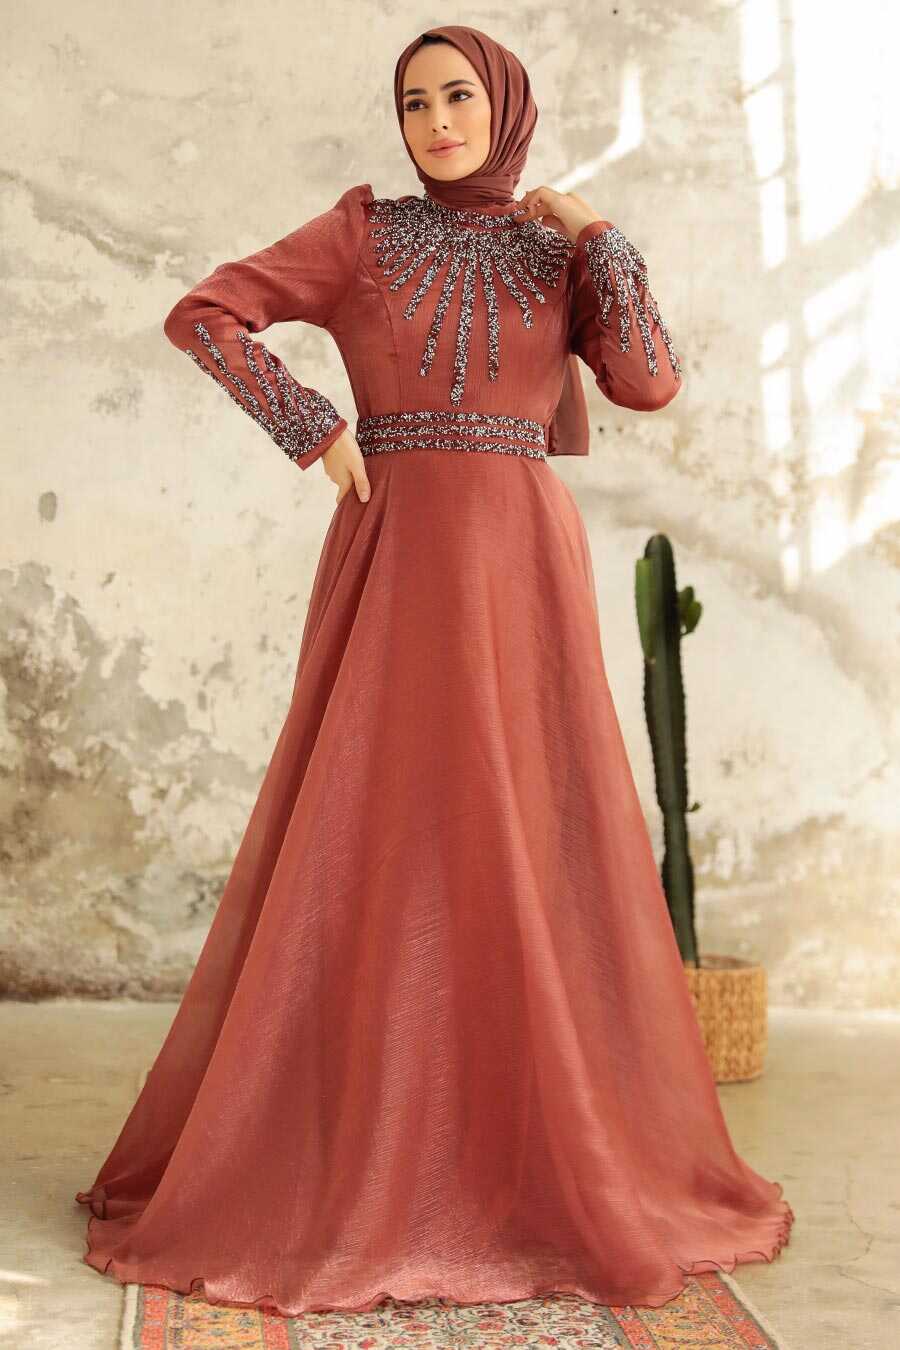 Neva Style - Luxury Terra Cotta Muslim Evening Gown 3774KRMT